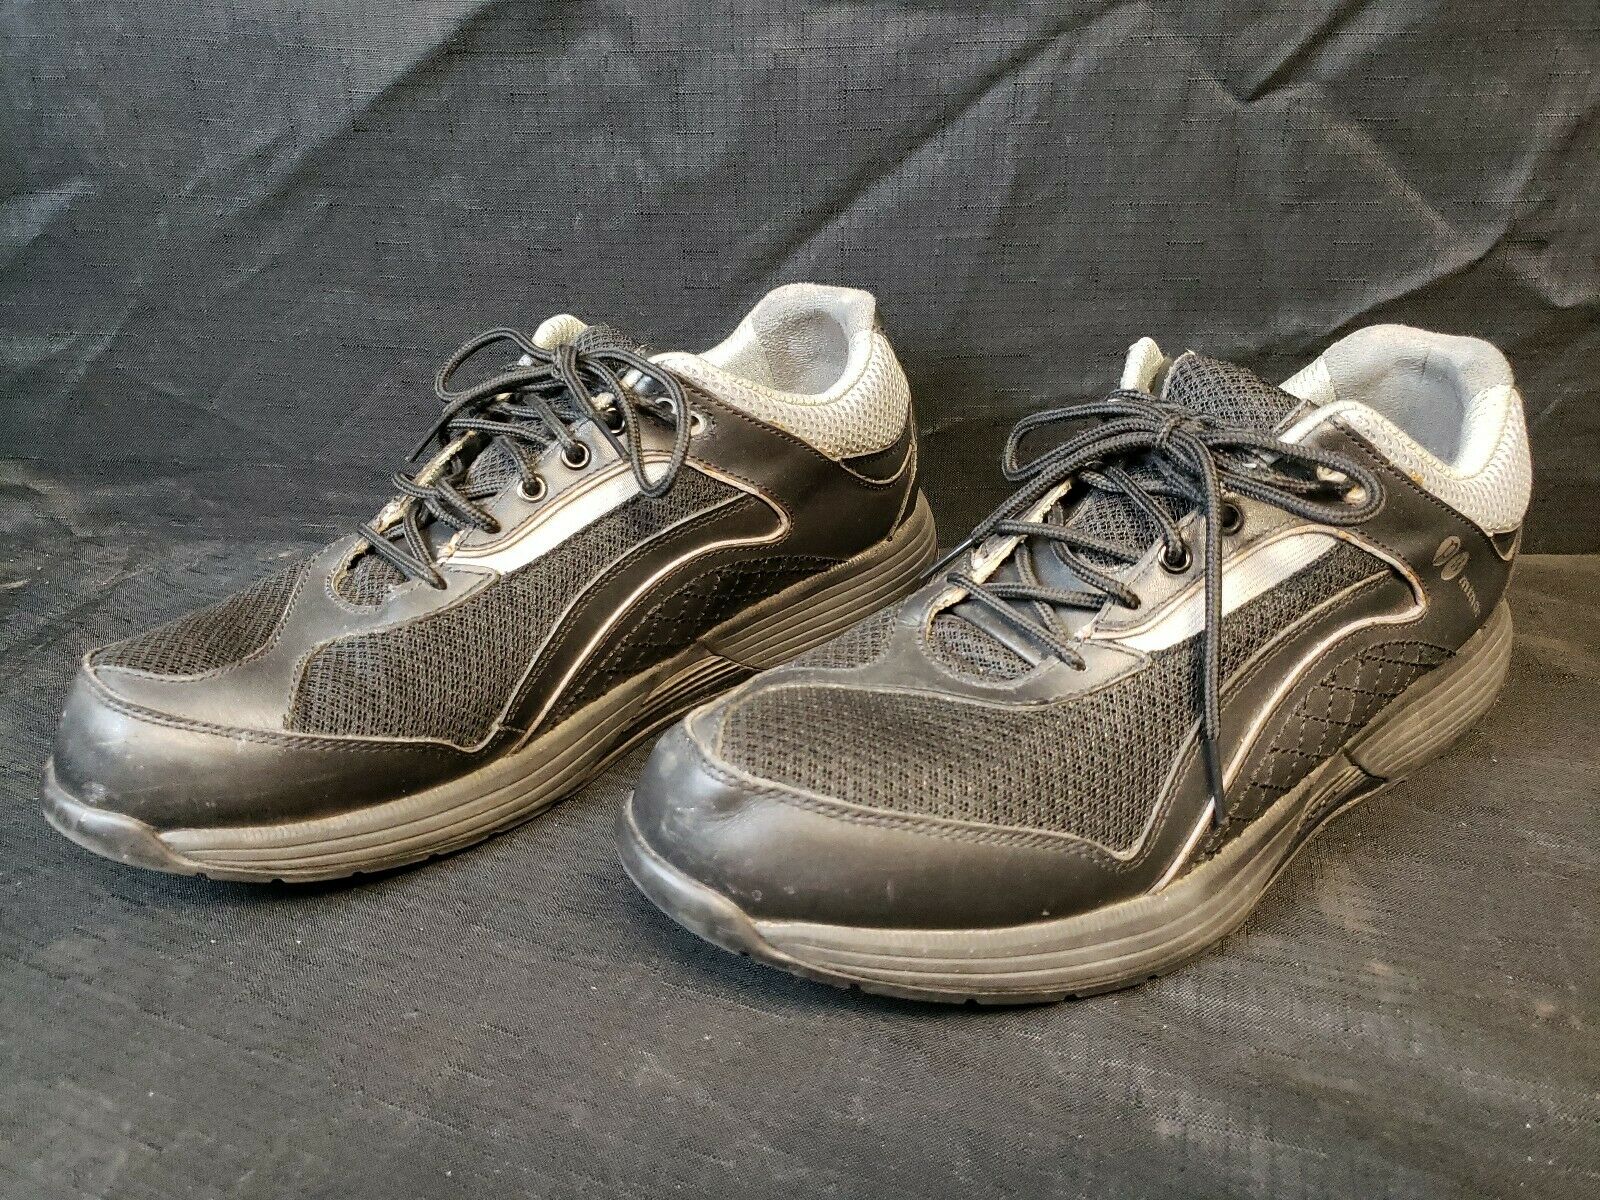 PW MINOR Emerald Stable Walker Men Black Elderly Orthotic Shoes Sneakers Size 11